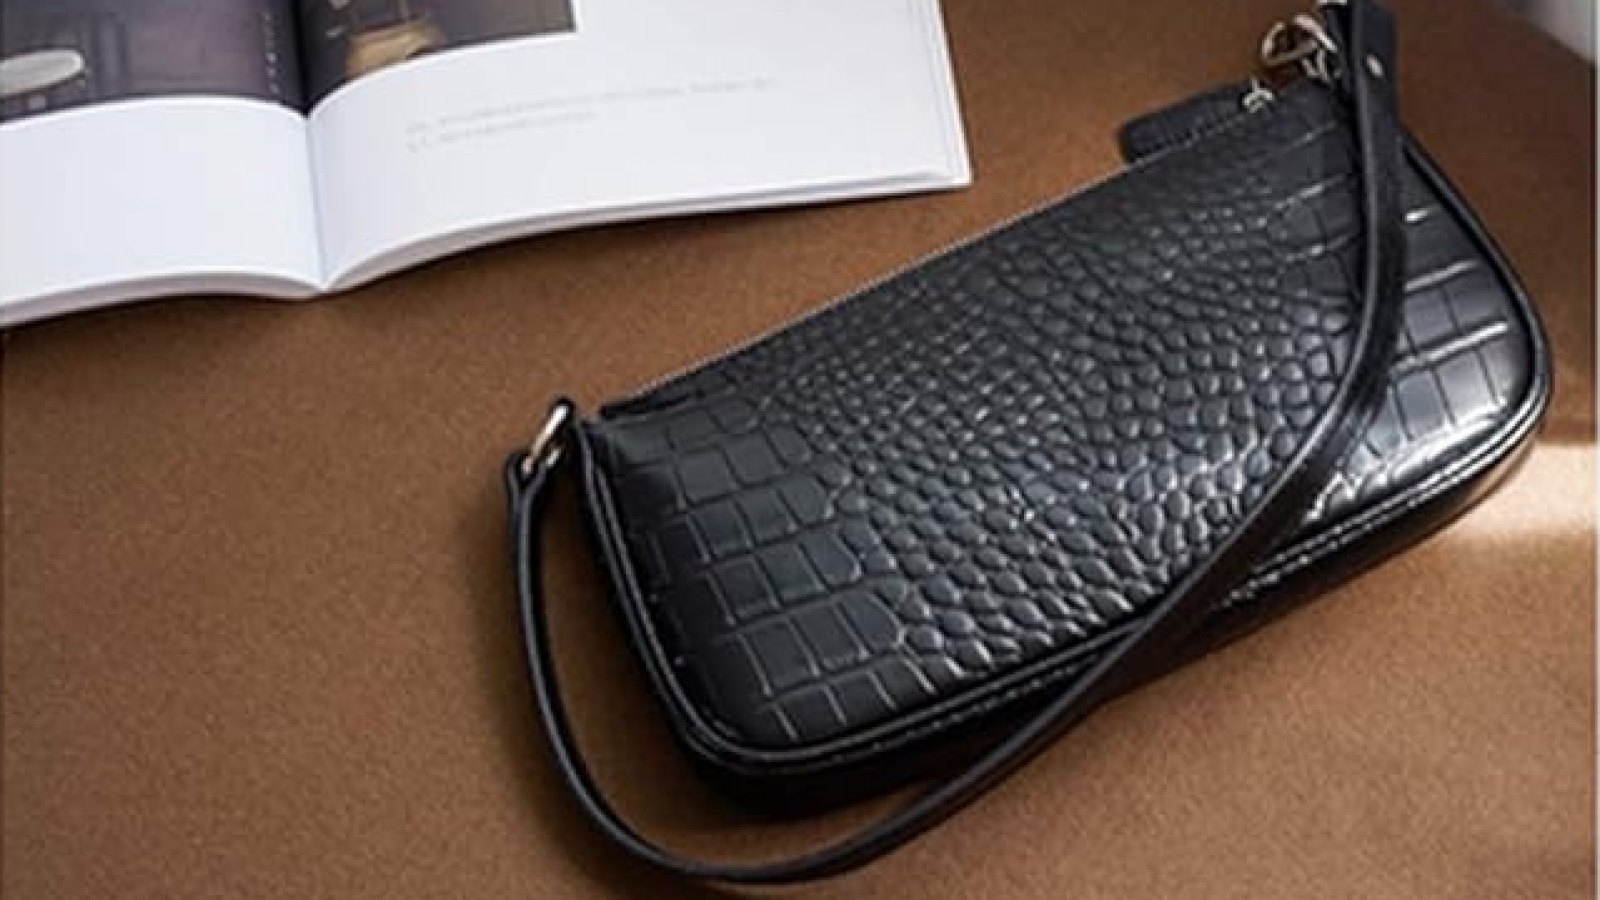 JEEP Crocodile Leather Handbag With Free Matching Wallet